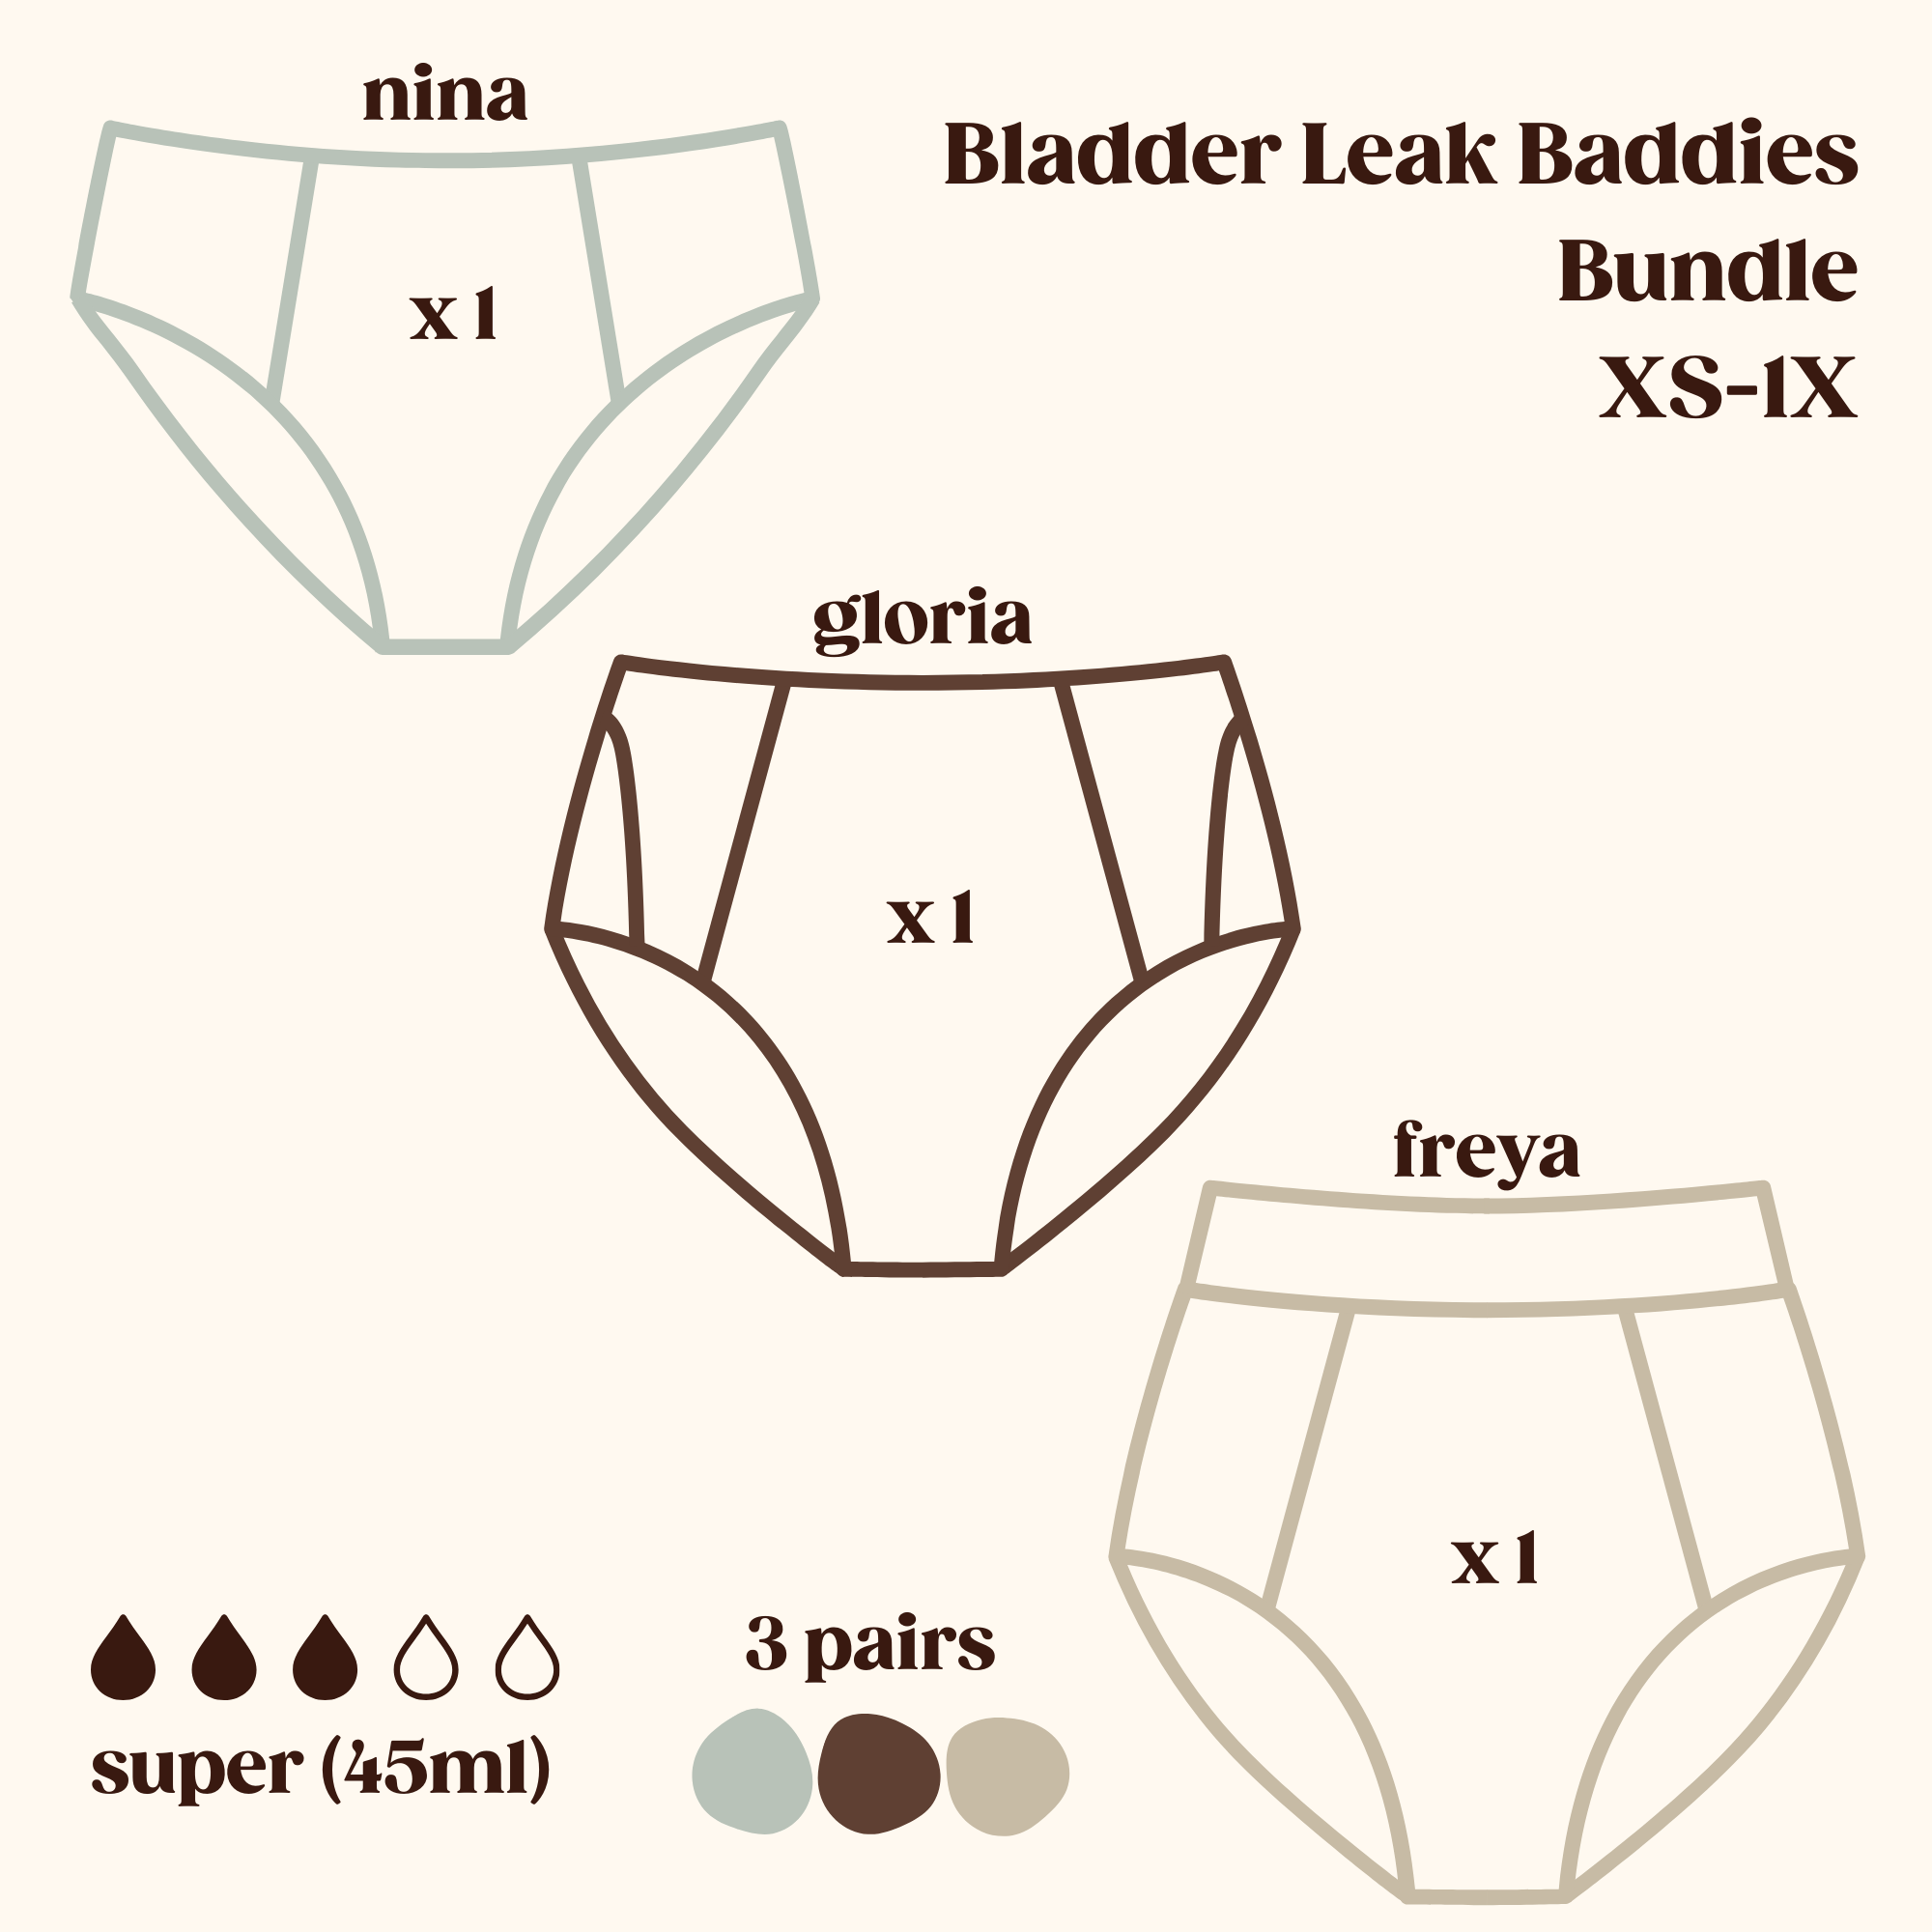 FallSweet Womens Leak Proof Period Pregnancy Panty 5 Pack, Cotton Briefs  For Menstrual Underwear, Plus Size 210720 From Lu04, $19.38